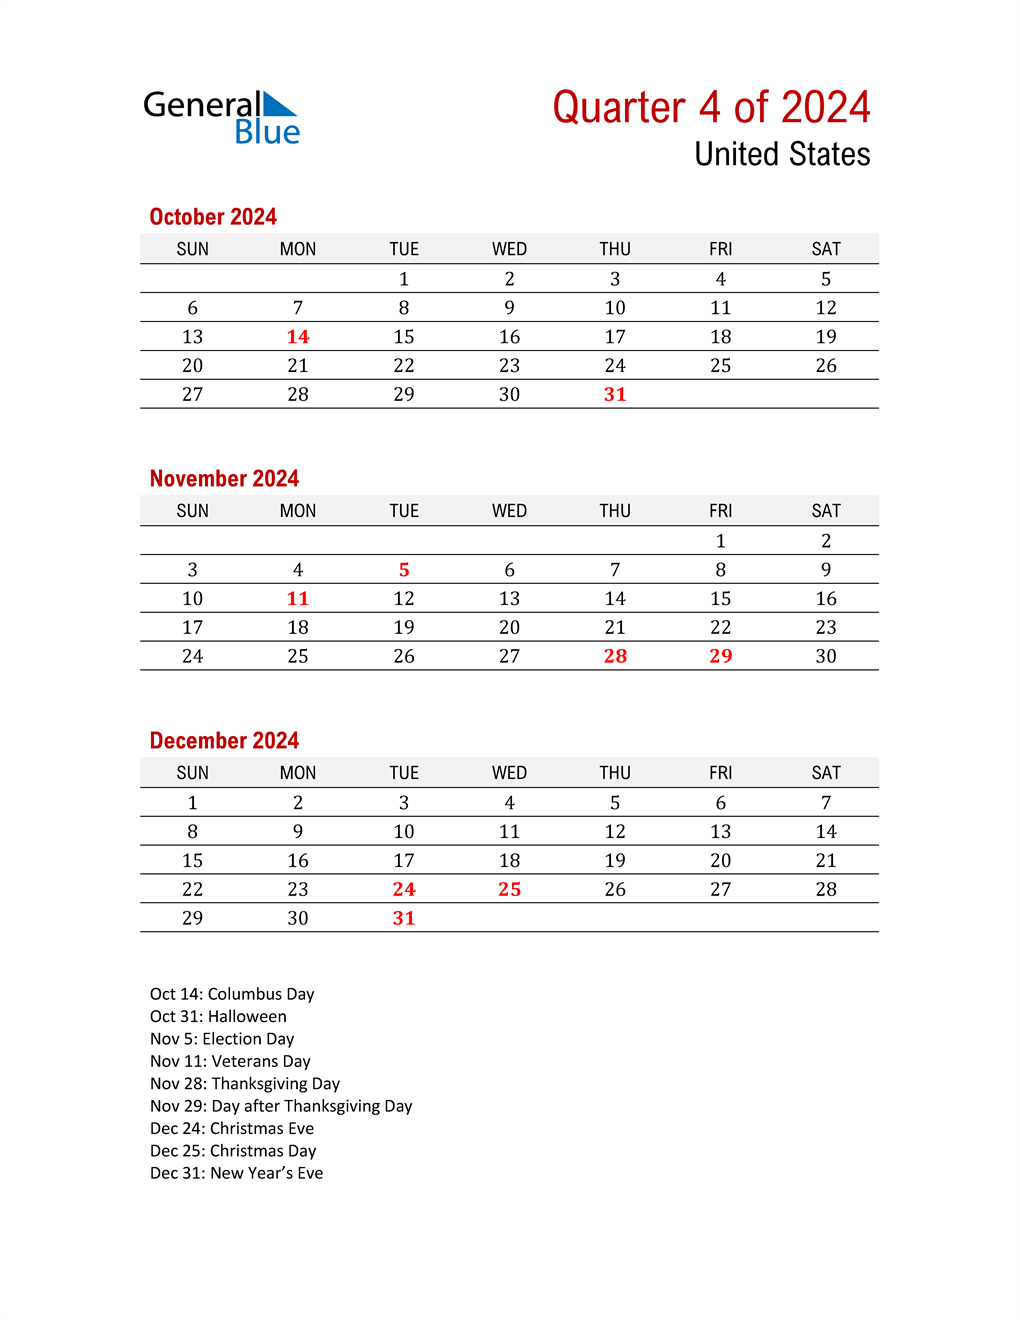 Q4 2024 Quarterly Calendar With United States Holidays